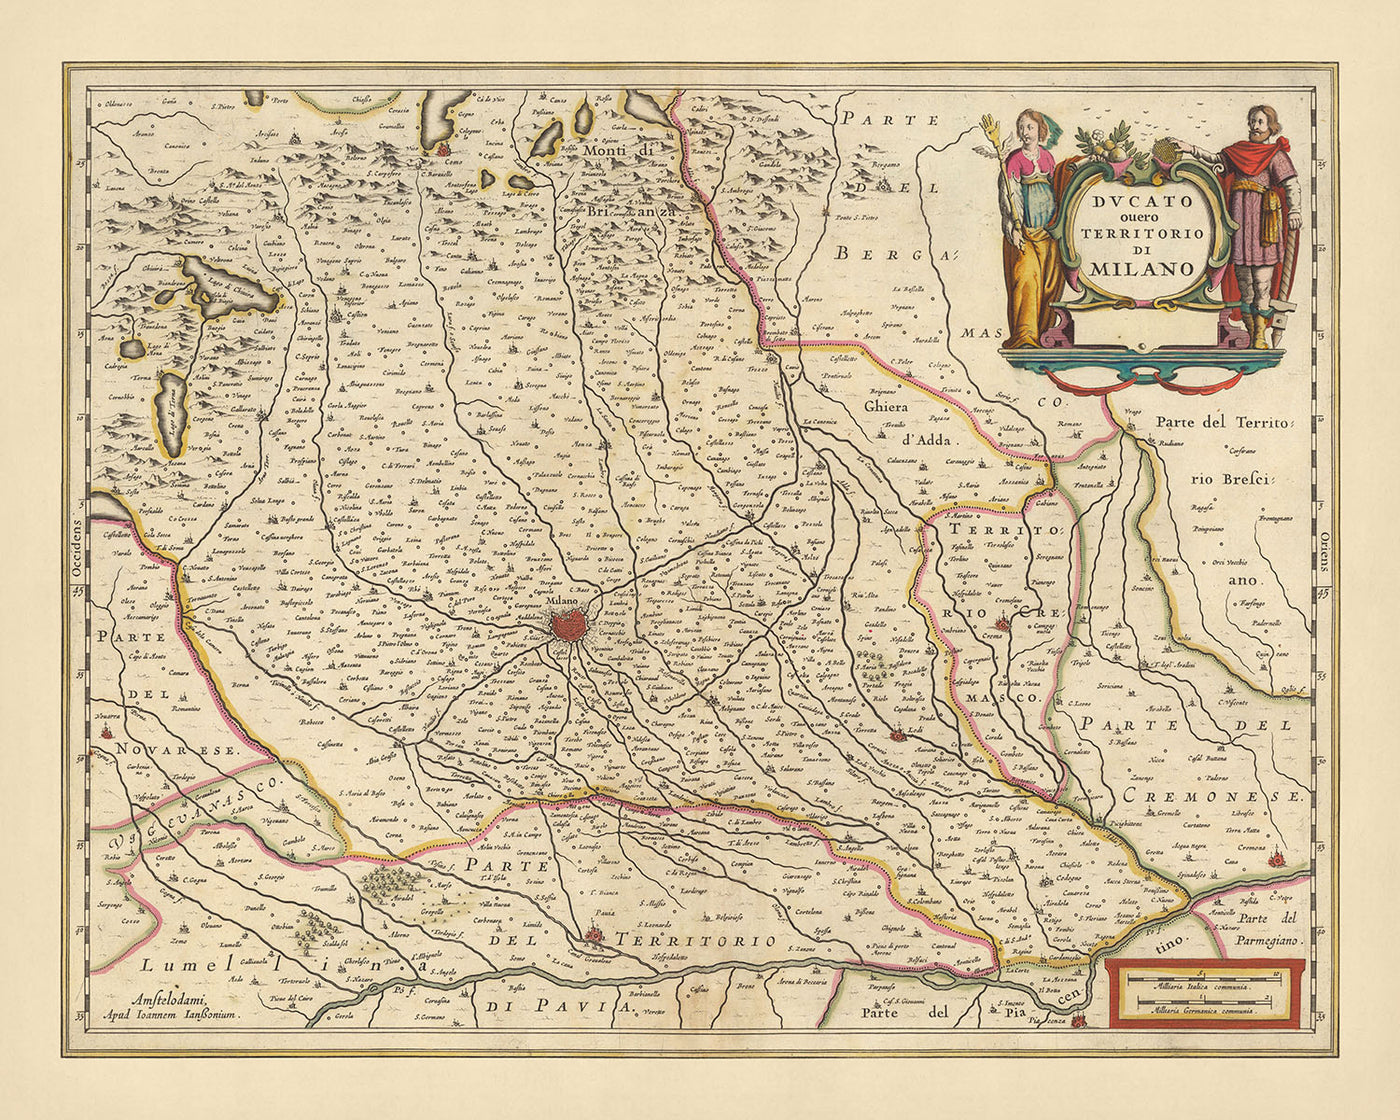 Old Map of Duchy of Milan, Italy by Visscher, 1690: Como, Bergamo, Pavia, Piacenza, Parco Agricolo Sud Milano